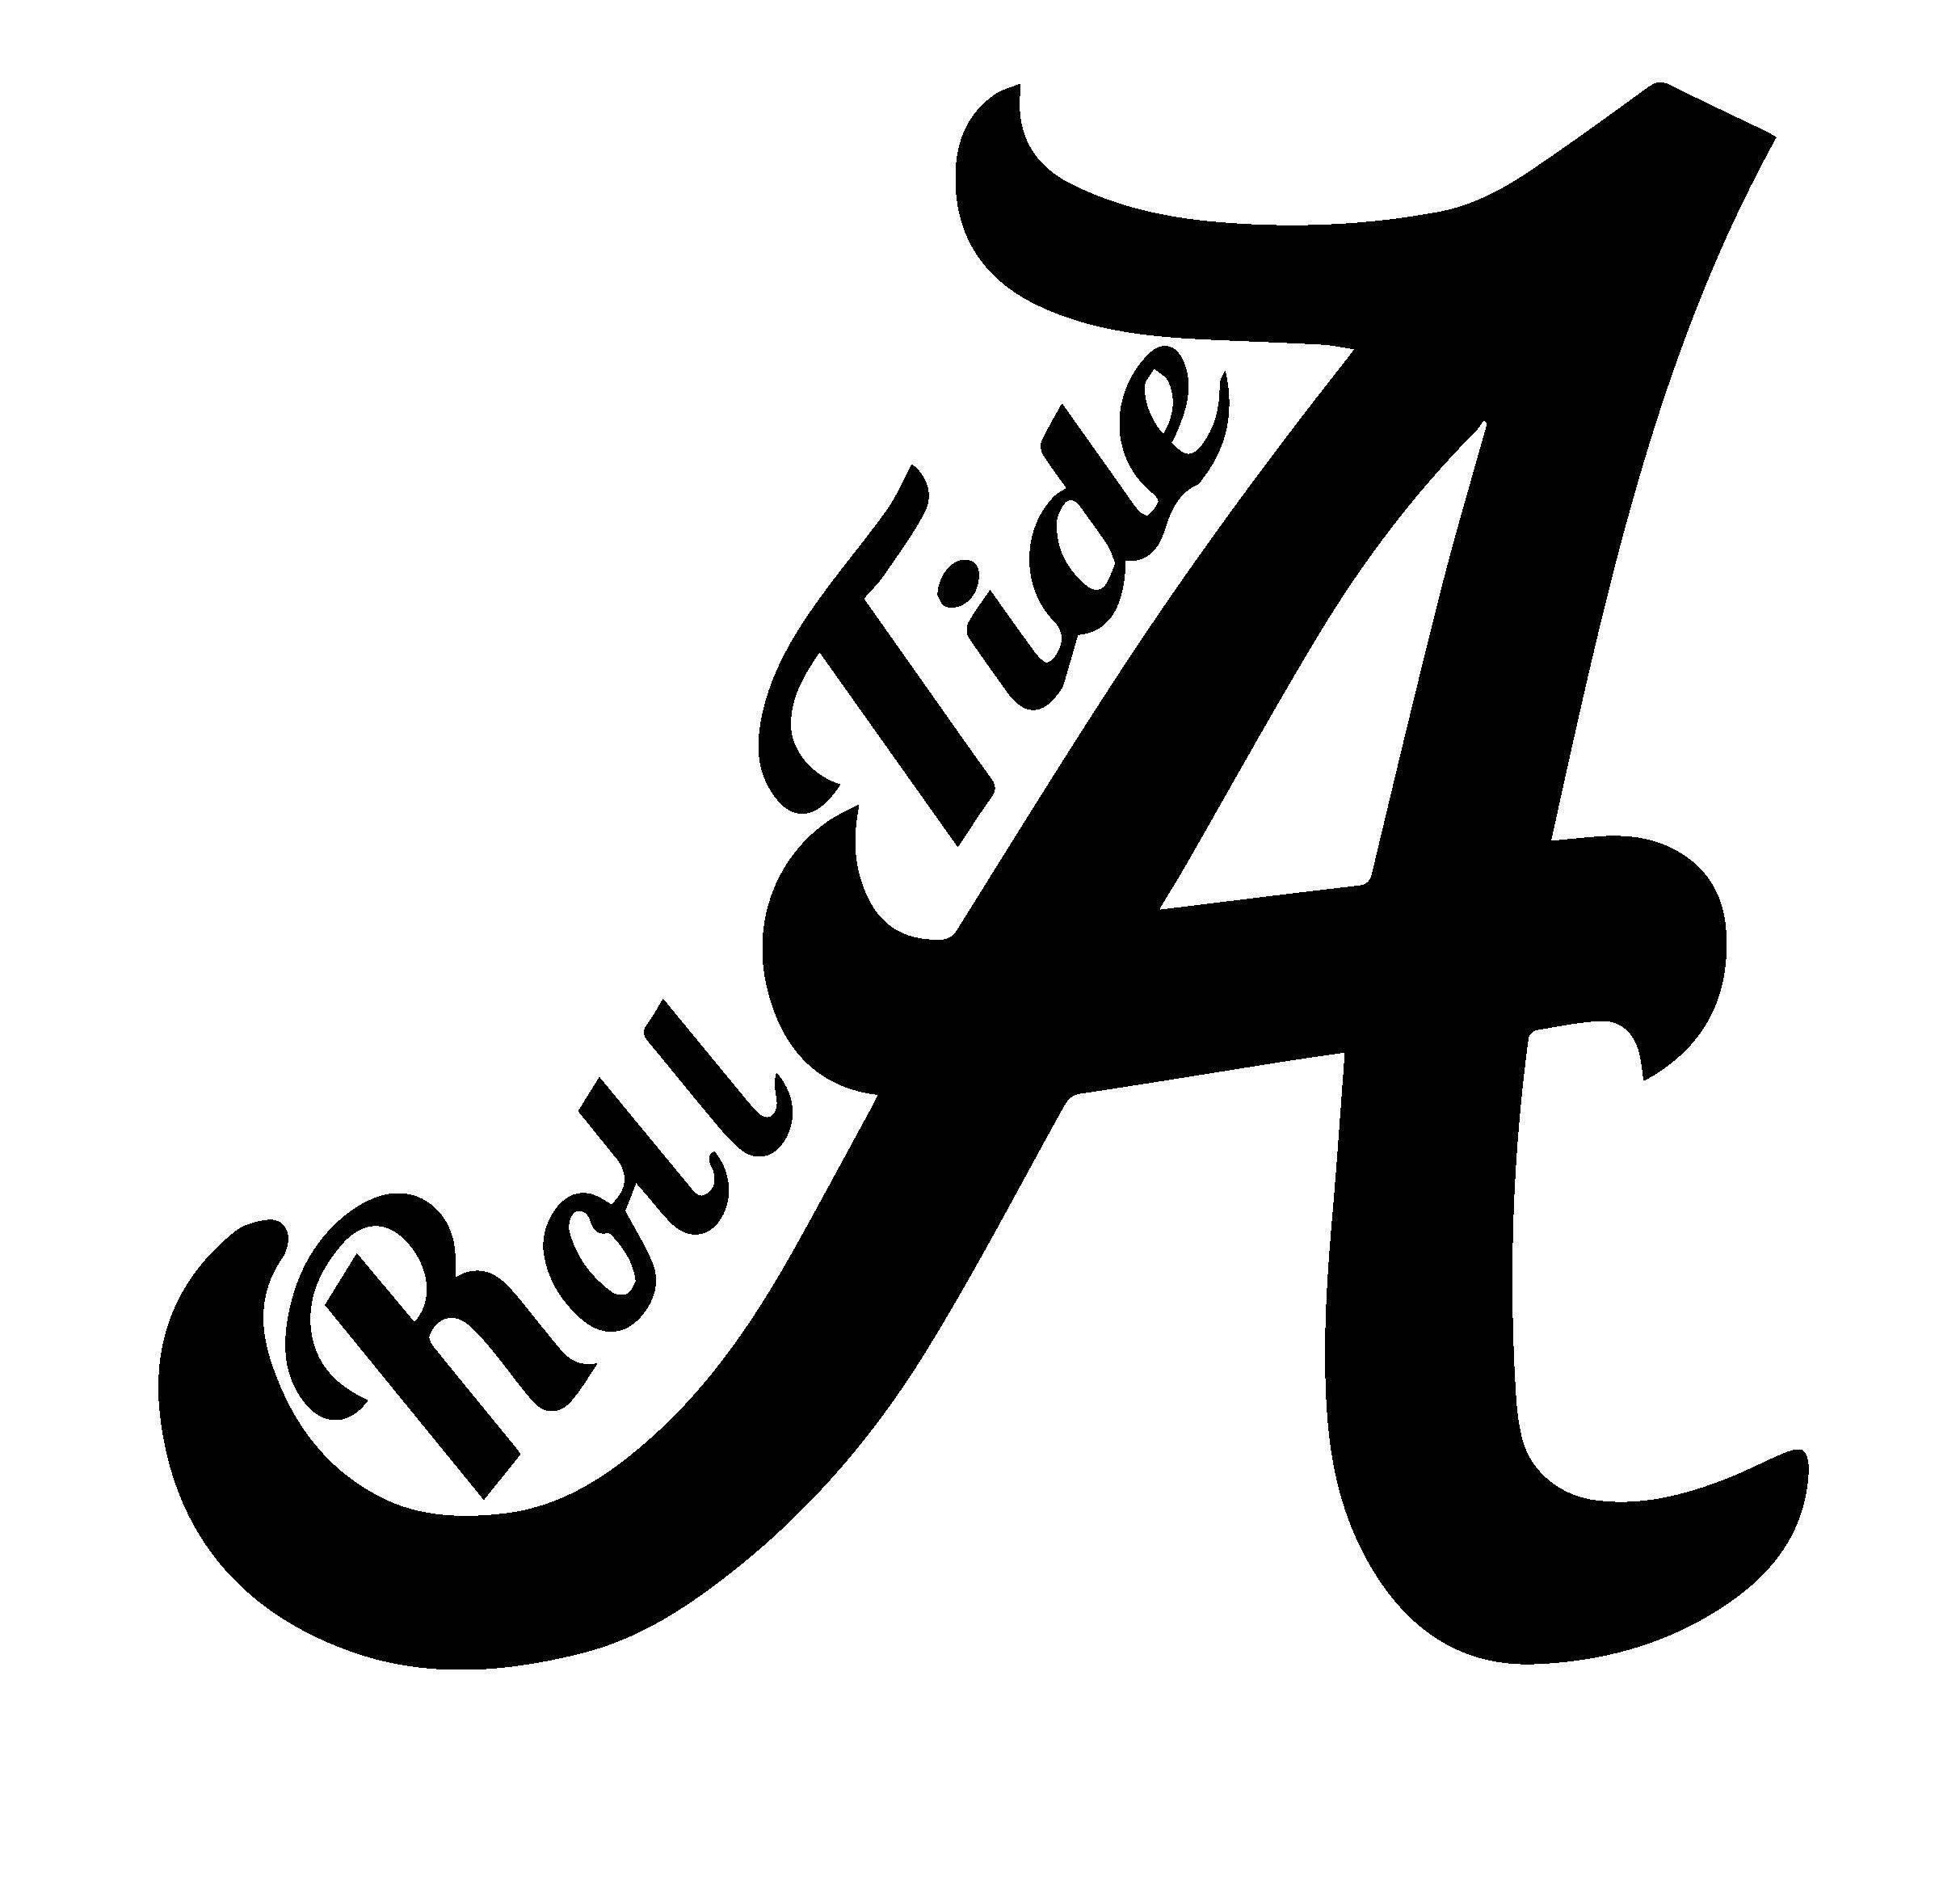 Alabama Roll Crimson Tide Logo - Alabama Crimson Tide 